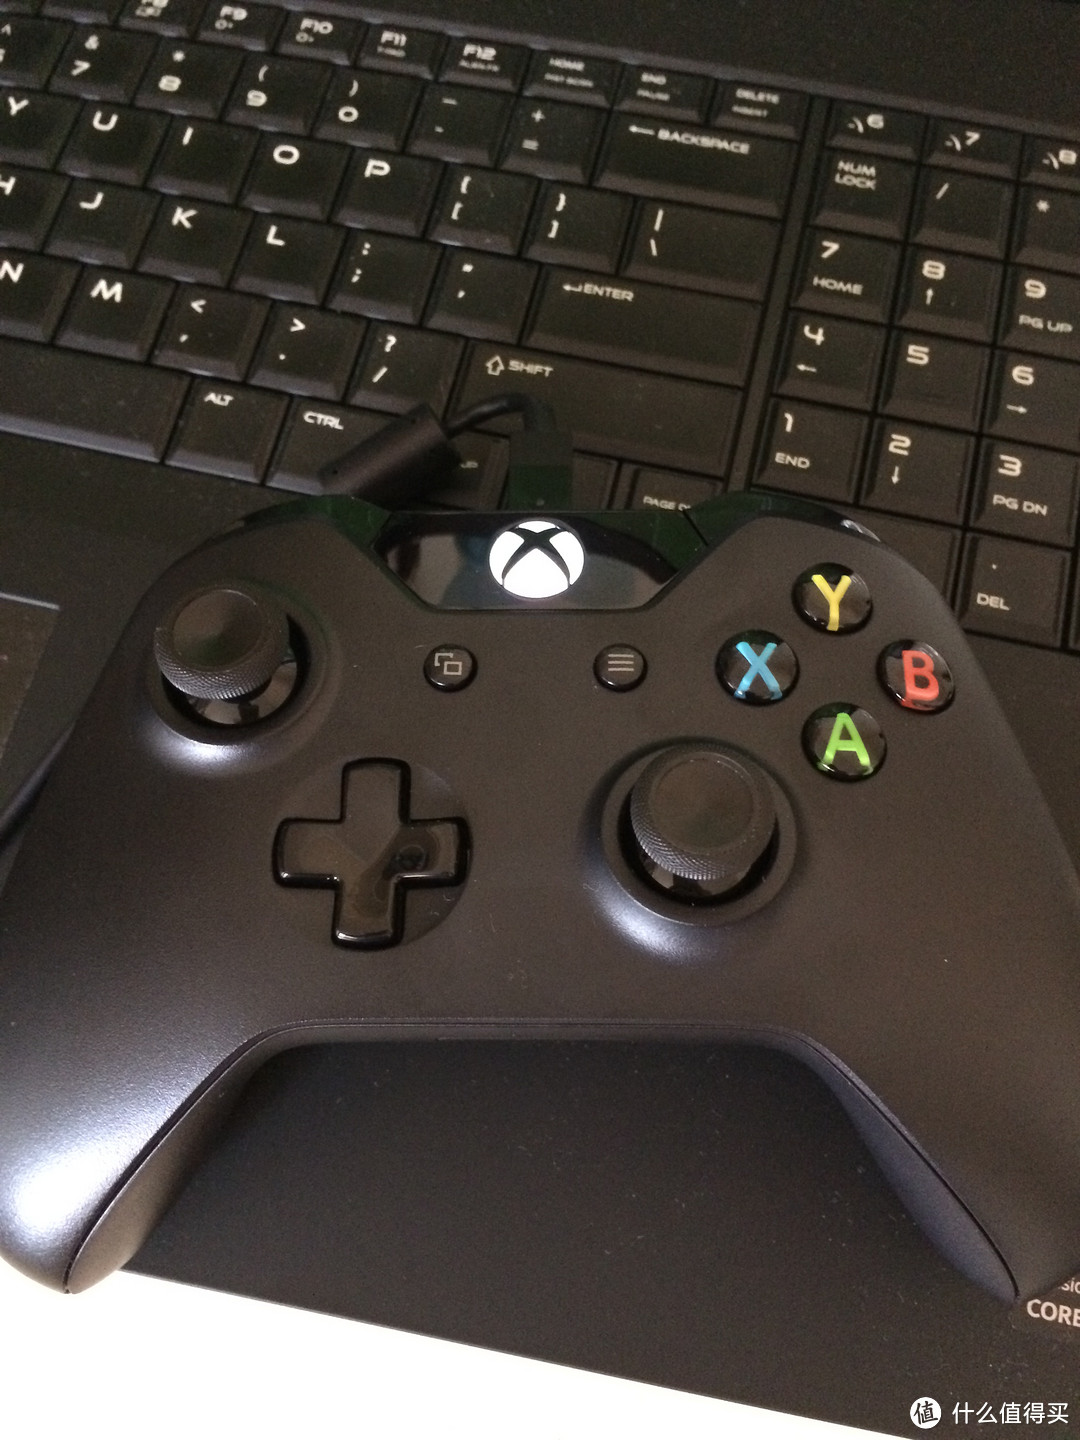 Microsoft 微软 Xbox One 无线手柄 + Windows 连接线